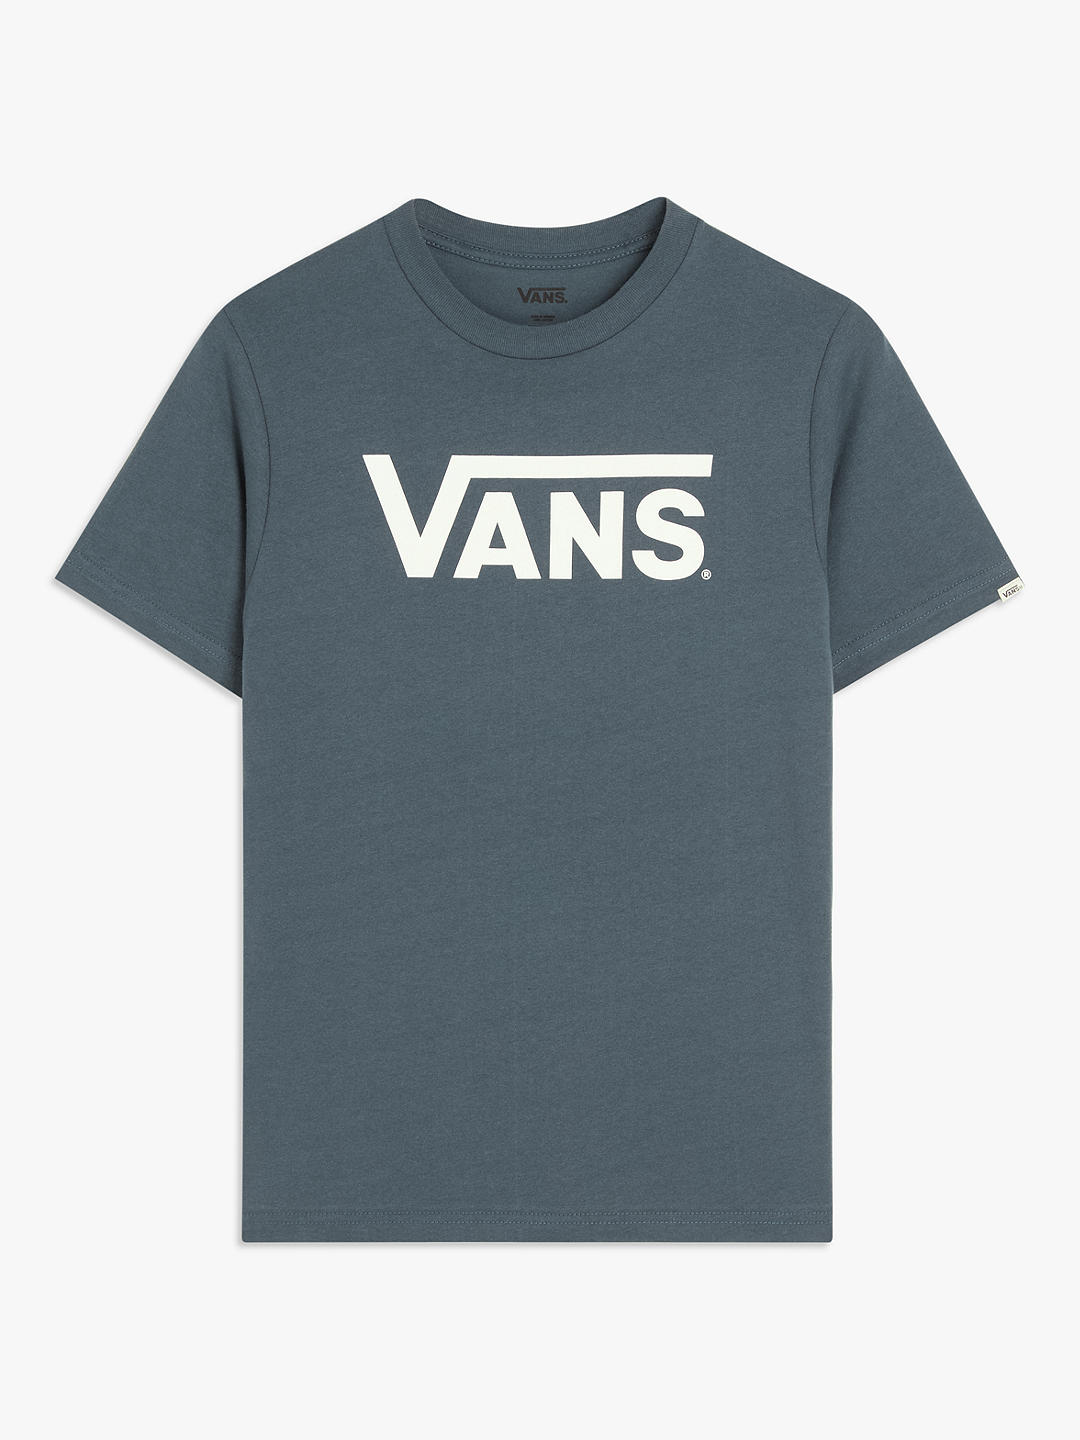 Vans Kids' Classic Flying V Logo Short Sleeve T-Shirt, Indigo